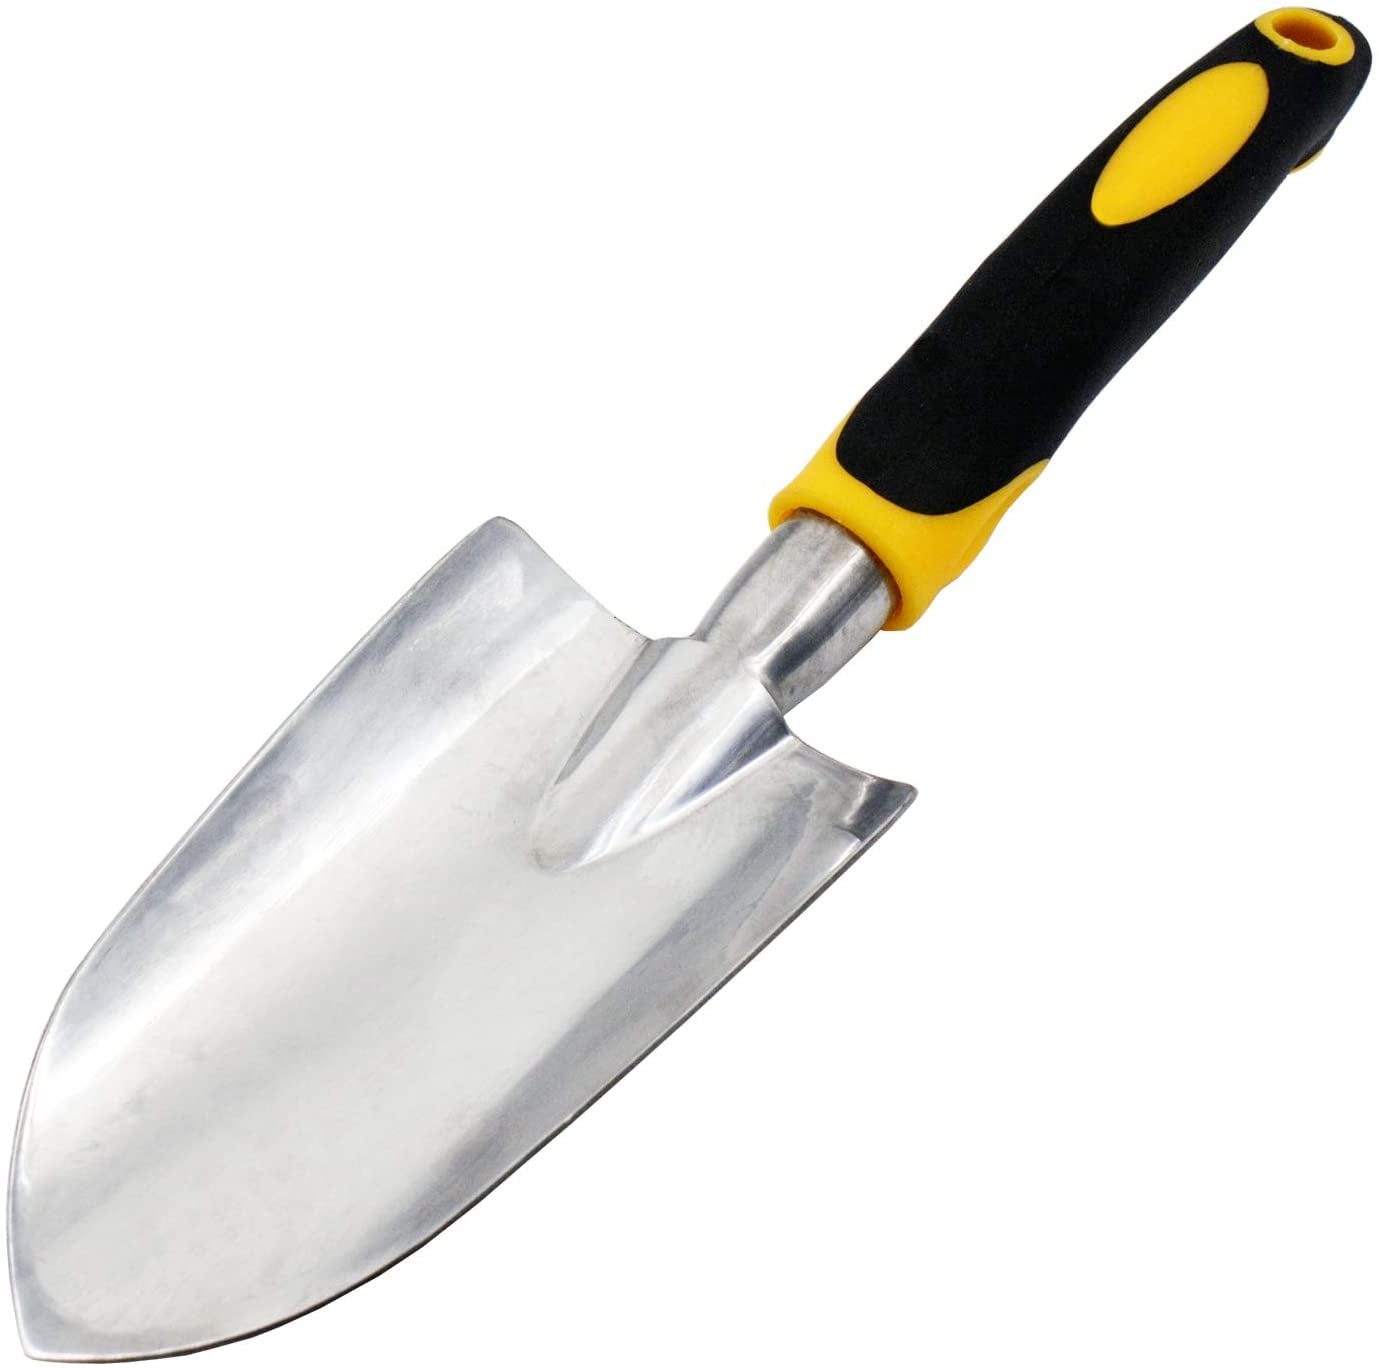 Stainless Steel Gardening Yard Hand Trowel Shovel Tool Gardening Handle Shovel 